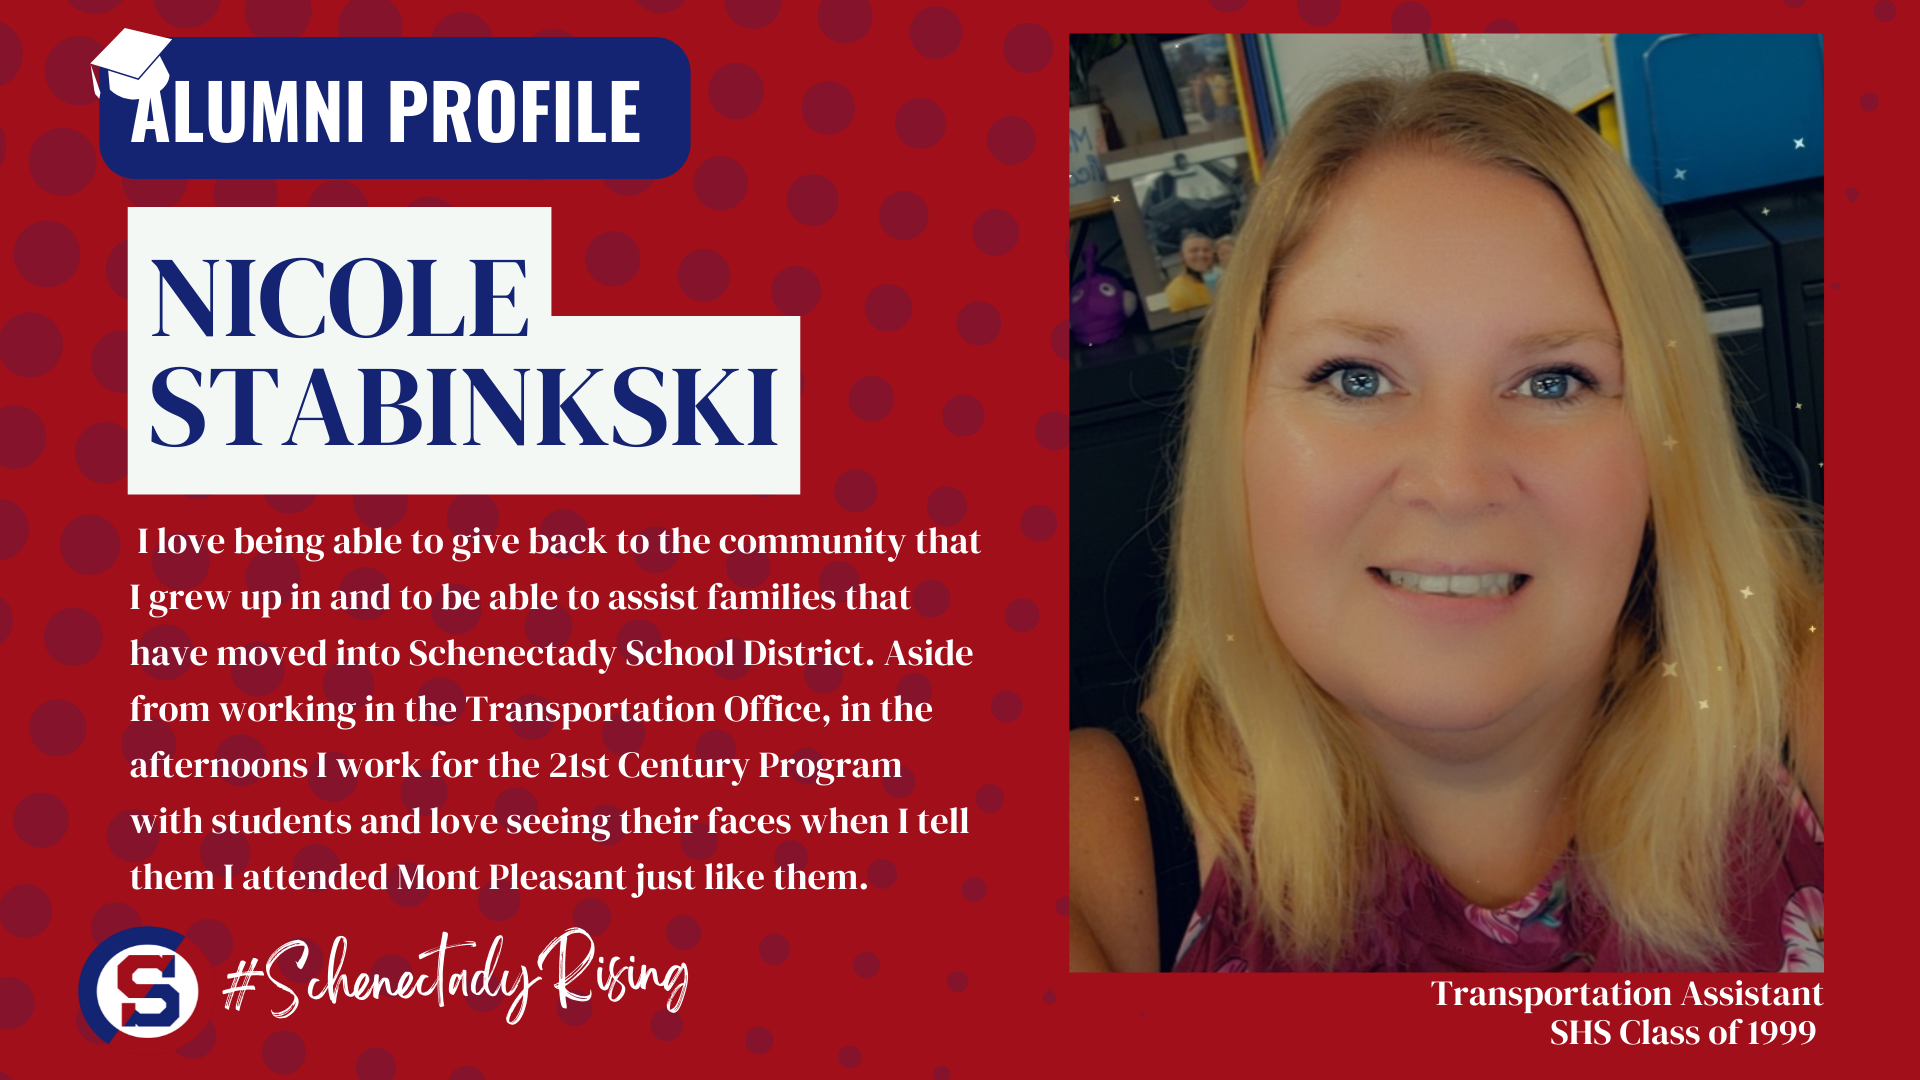 Alumni Profile:  Nicole Stabinski